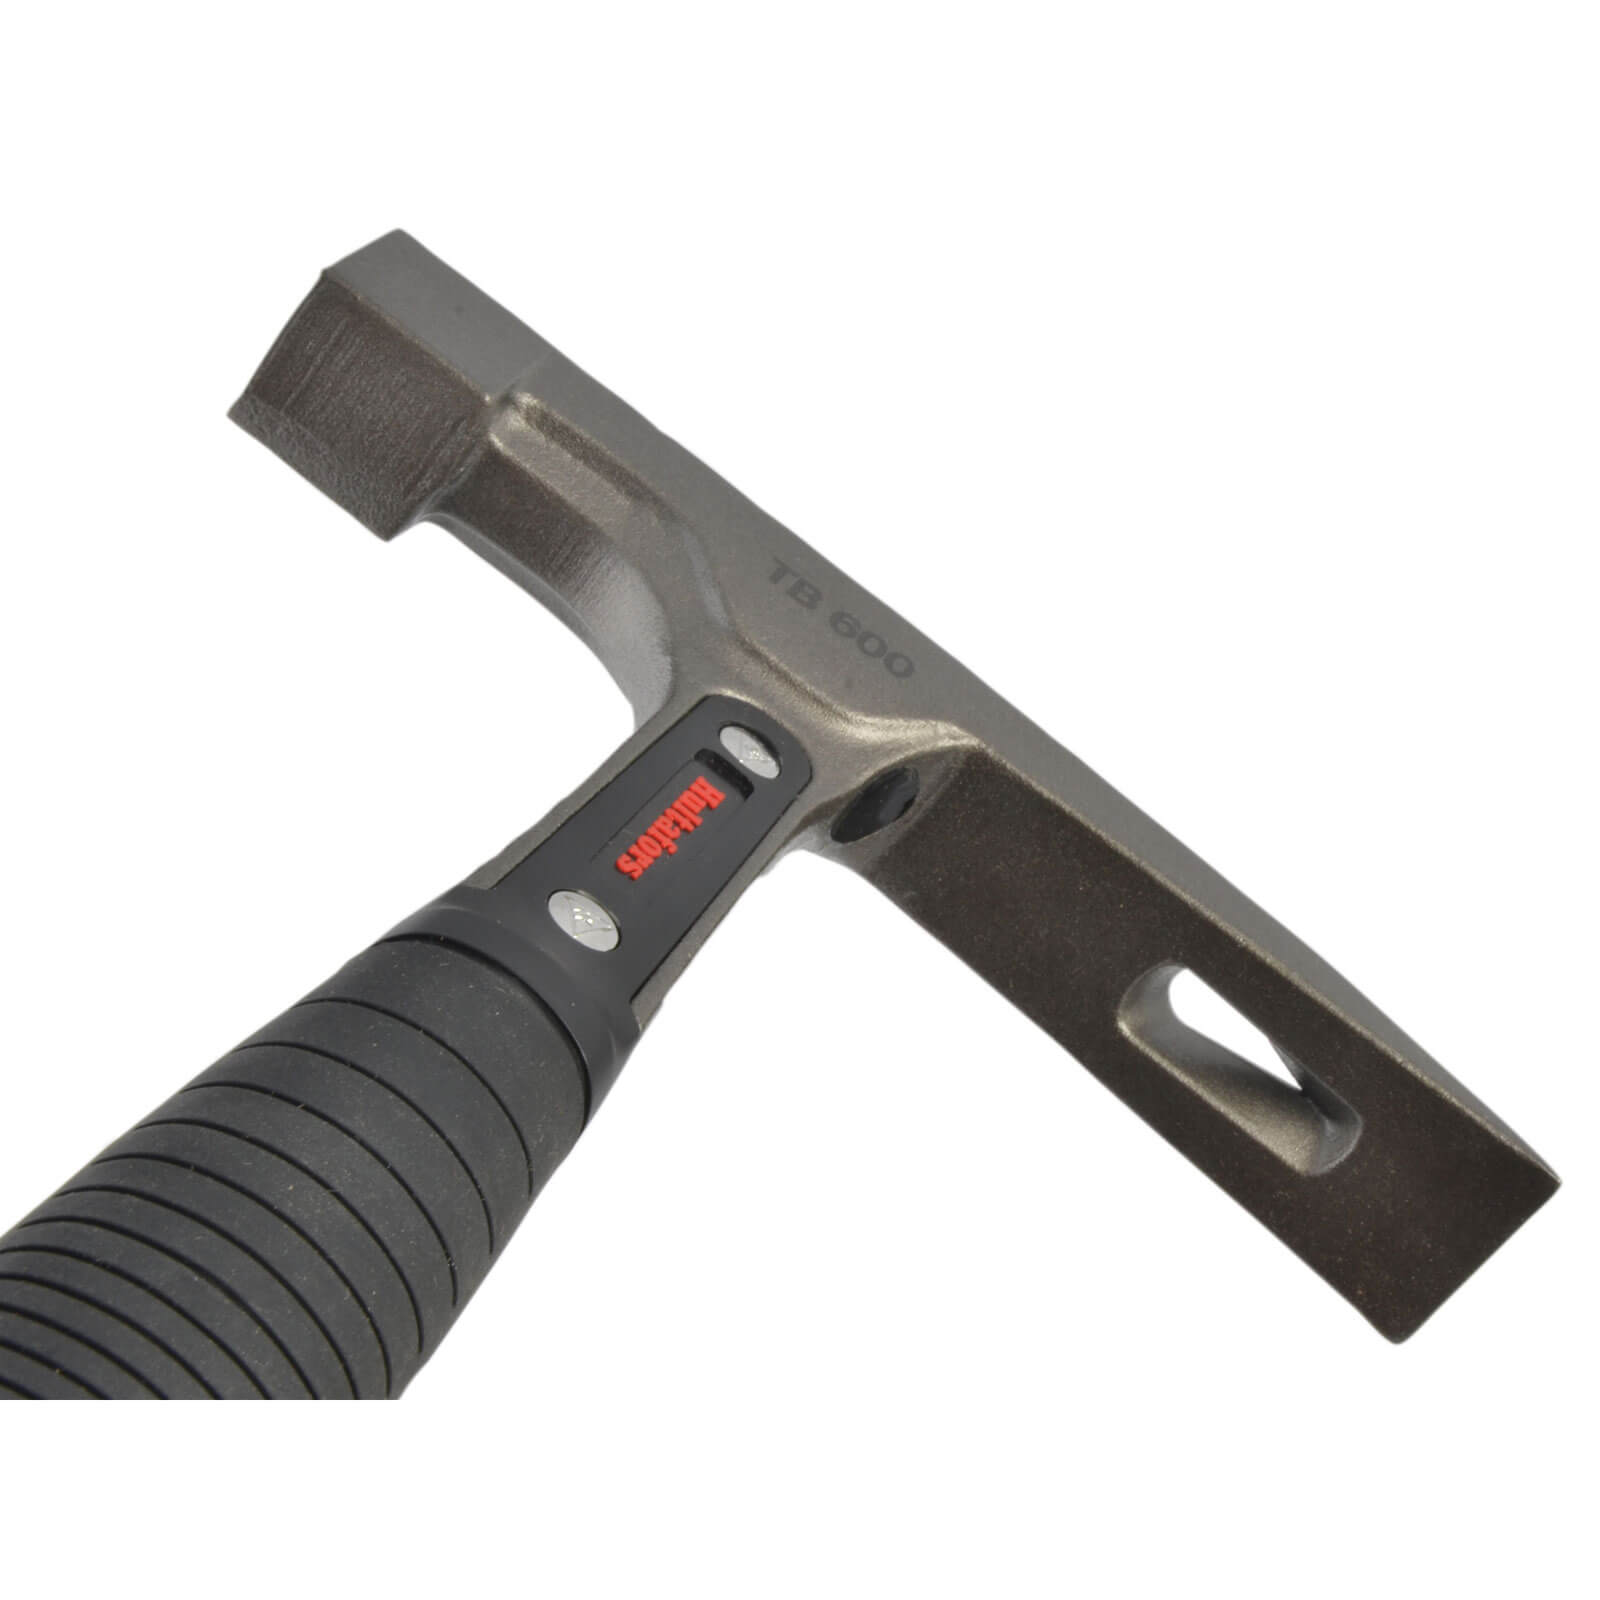 Hultafors TB600 Bricklayers Brick Hammer 900g 2lb Soft Grip Handle 822281 